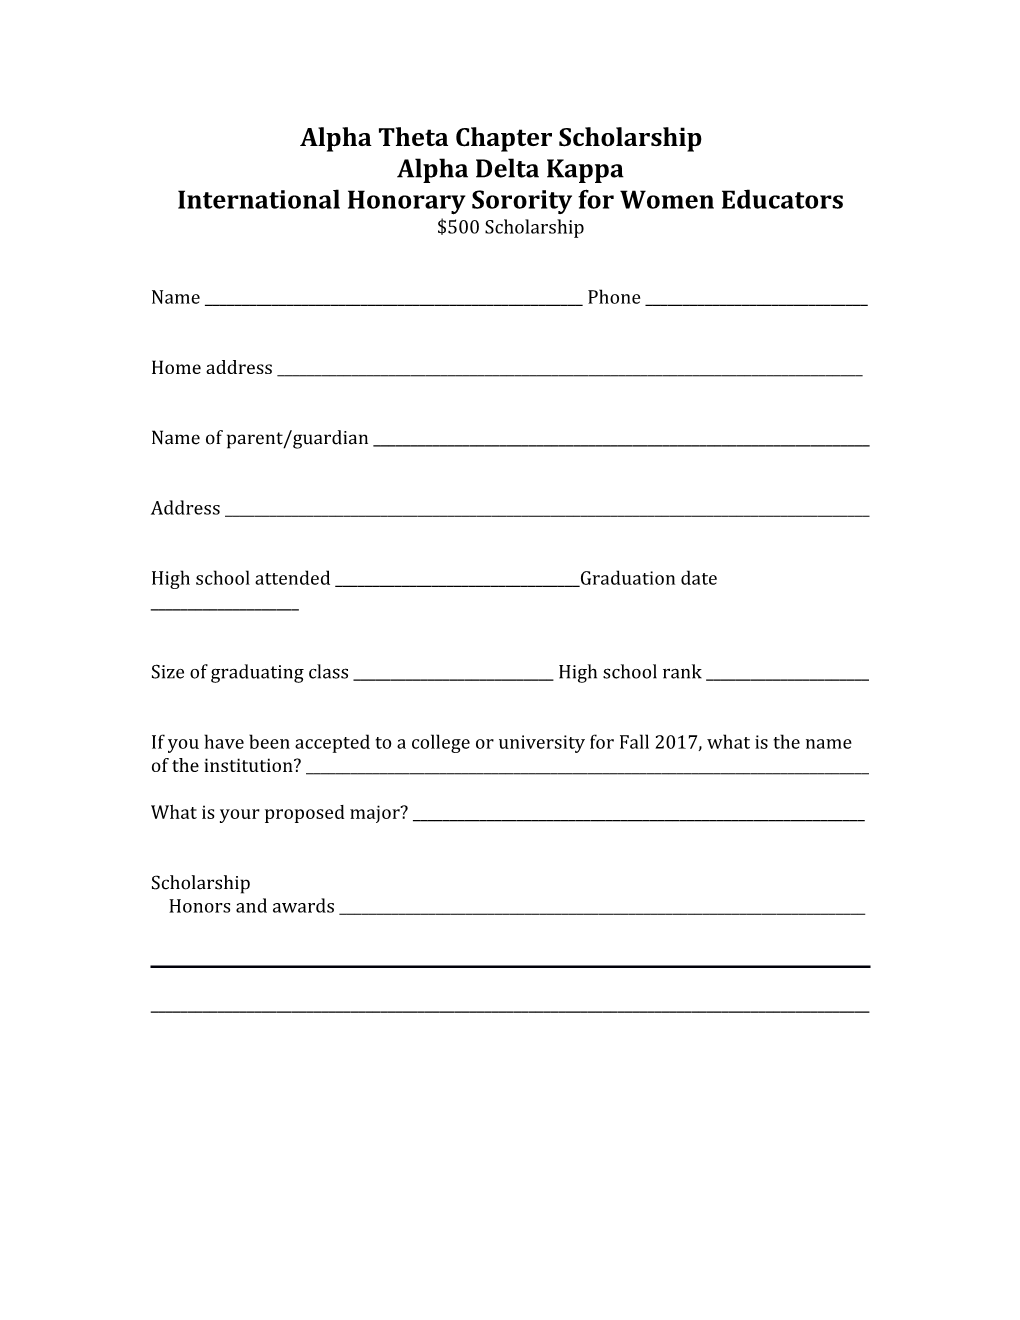 International Honorary Sorority for Women Educators